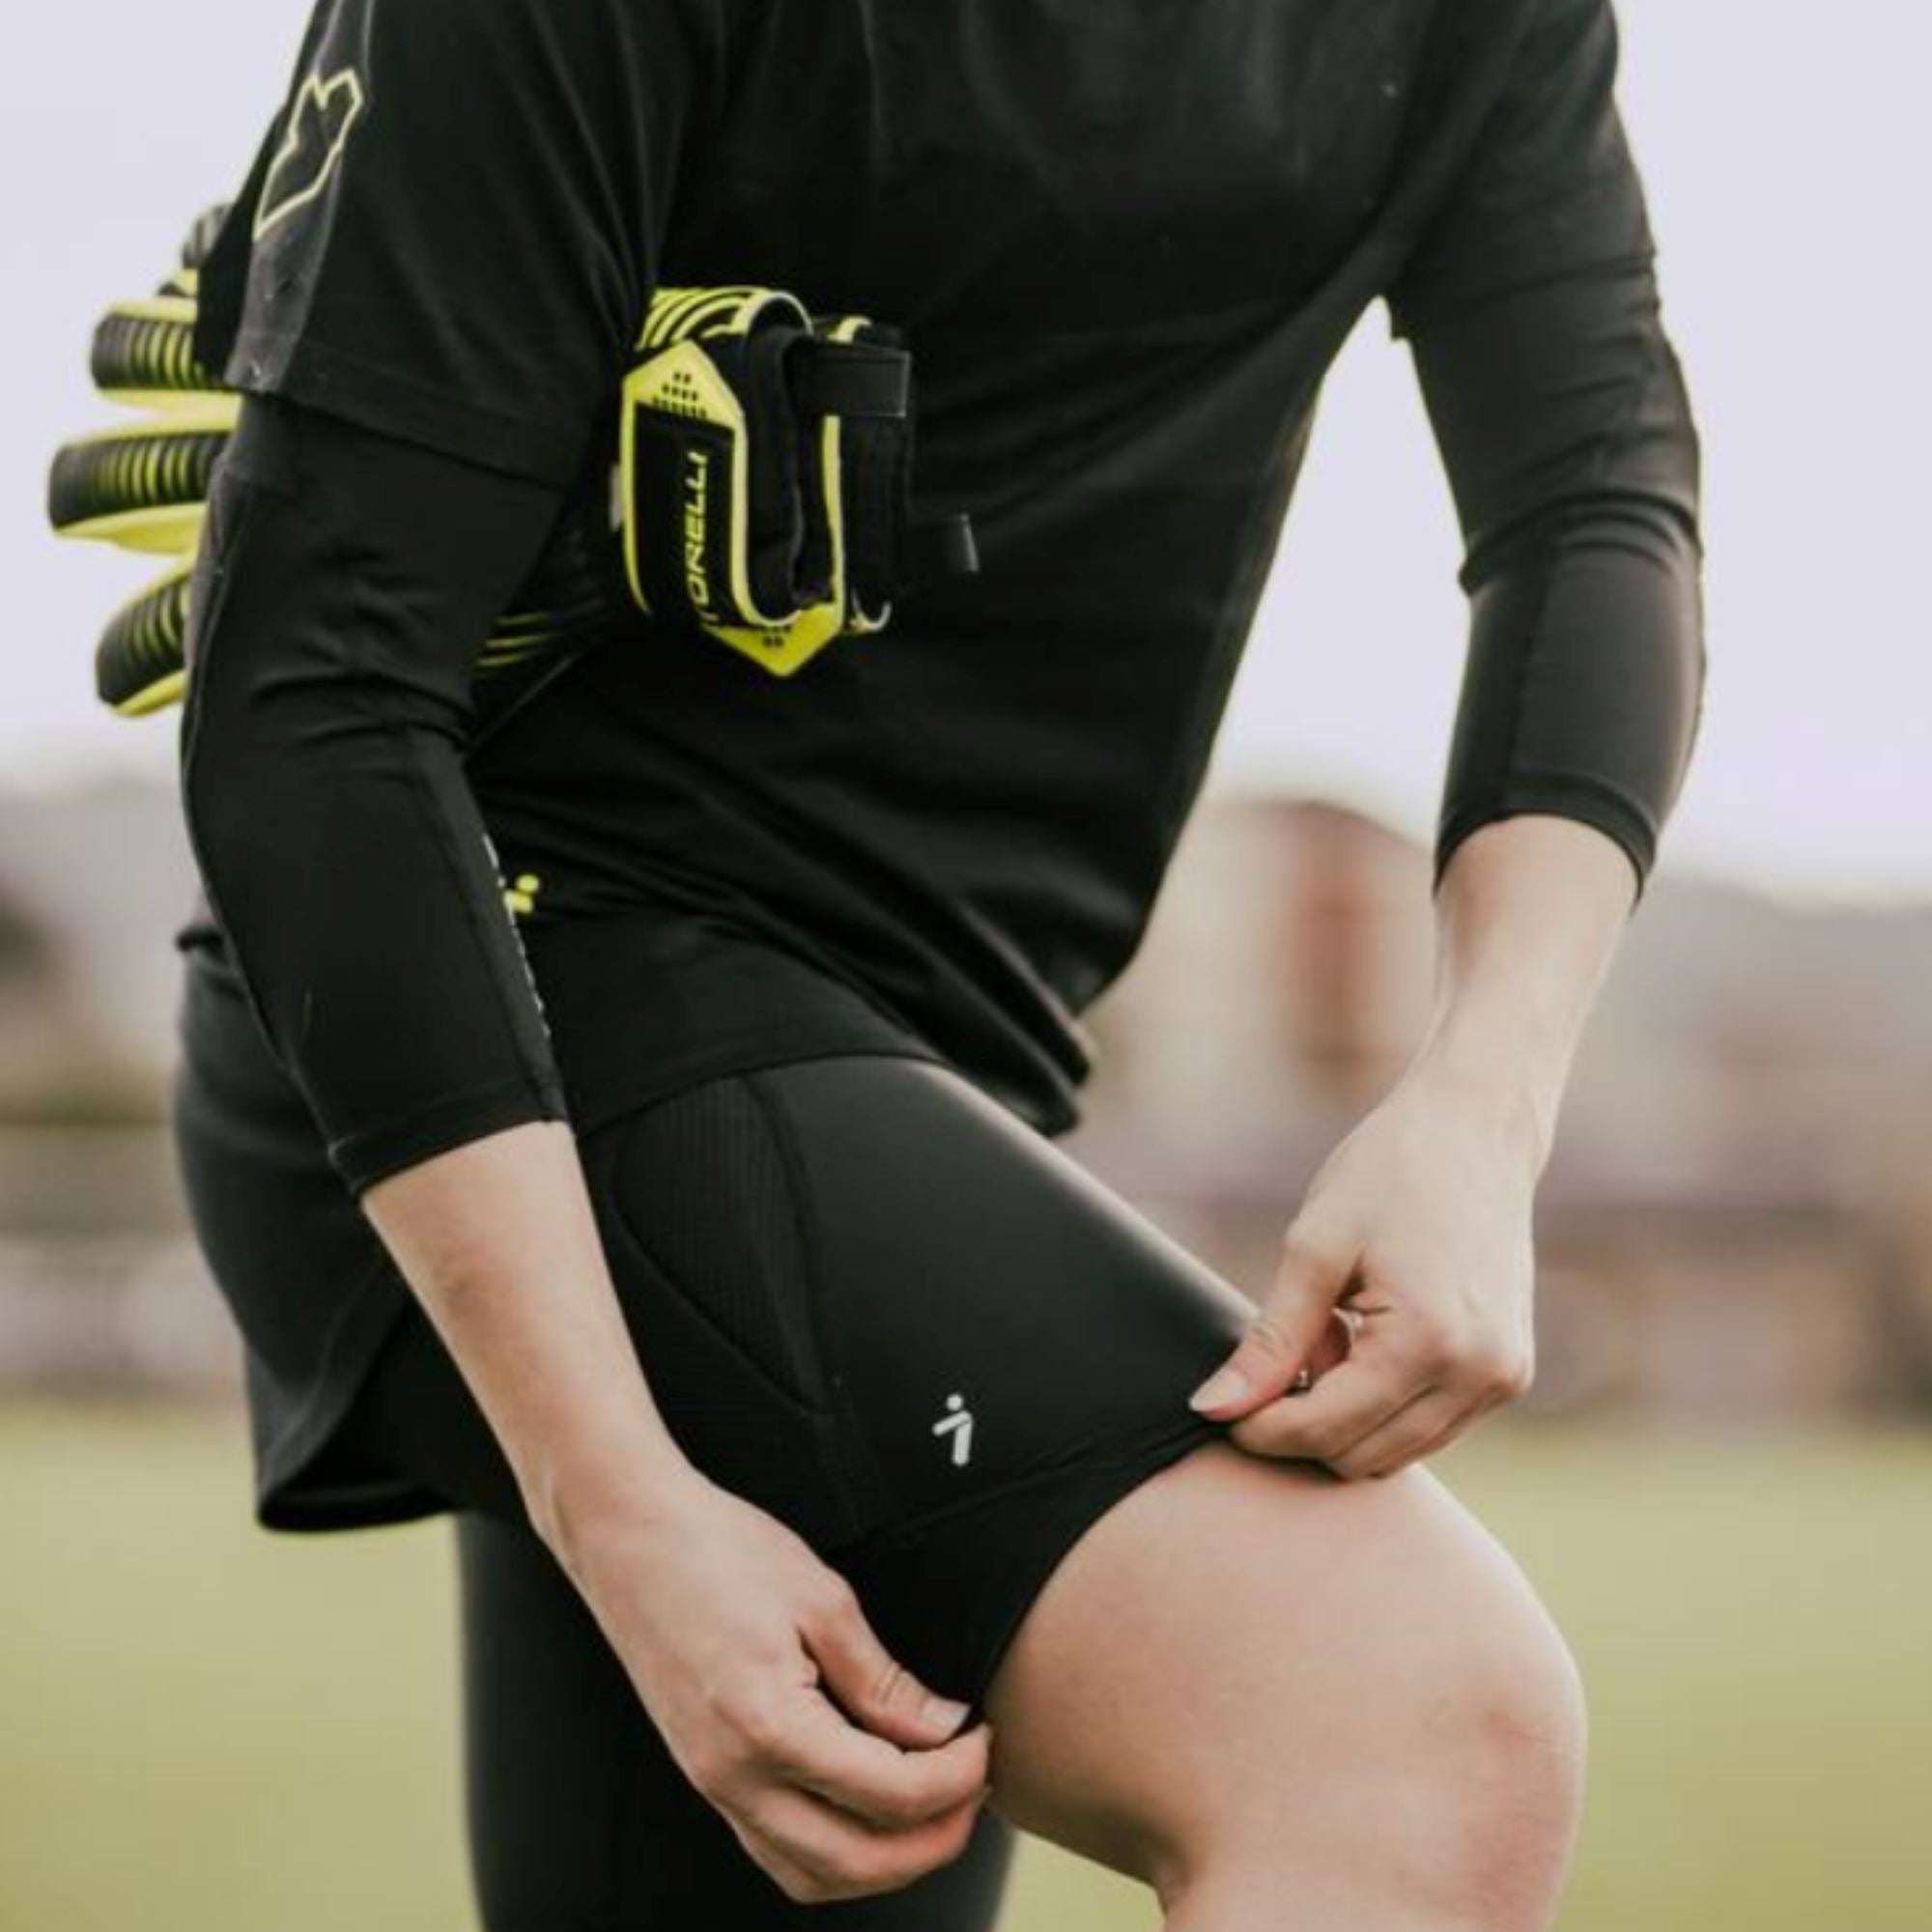 Women's Goalkeeper Sliding Shorts by Storelli - ITASPORT